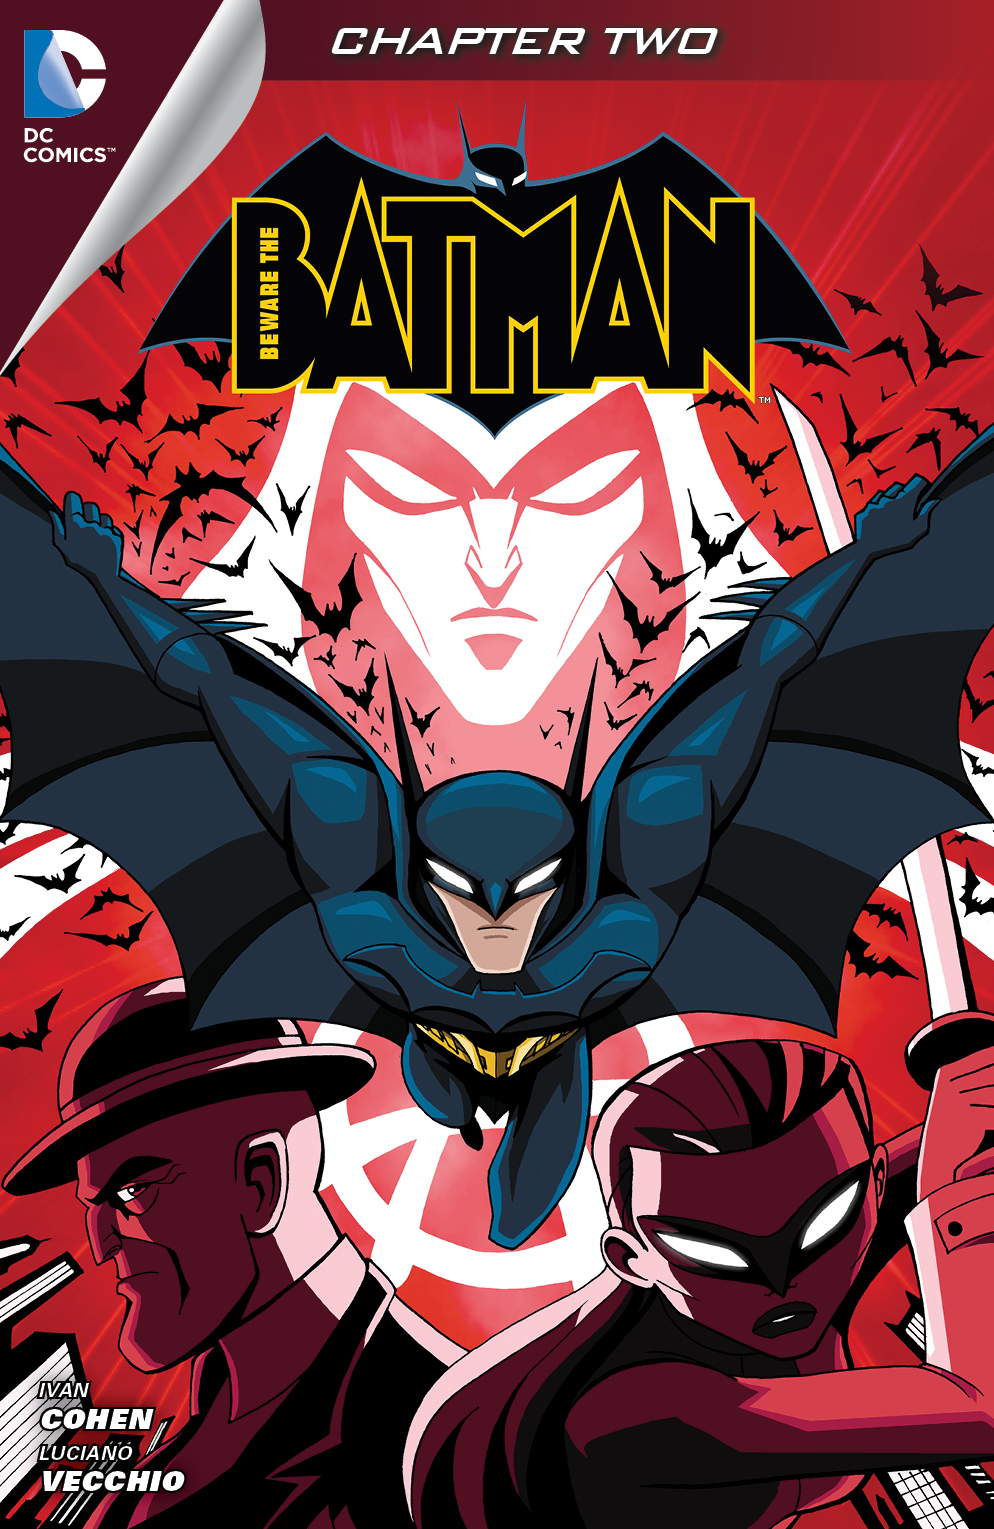 Beware The Batman #2 preview images